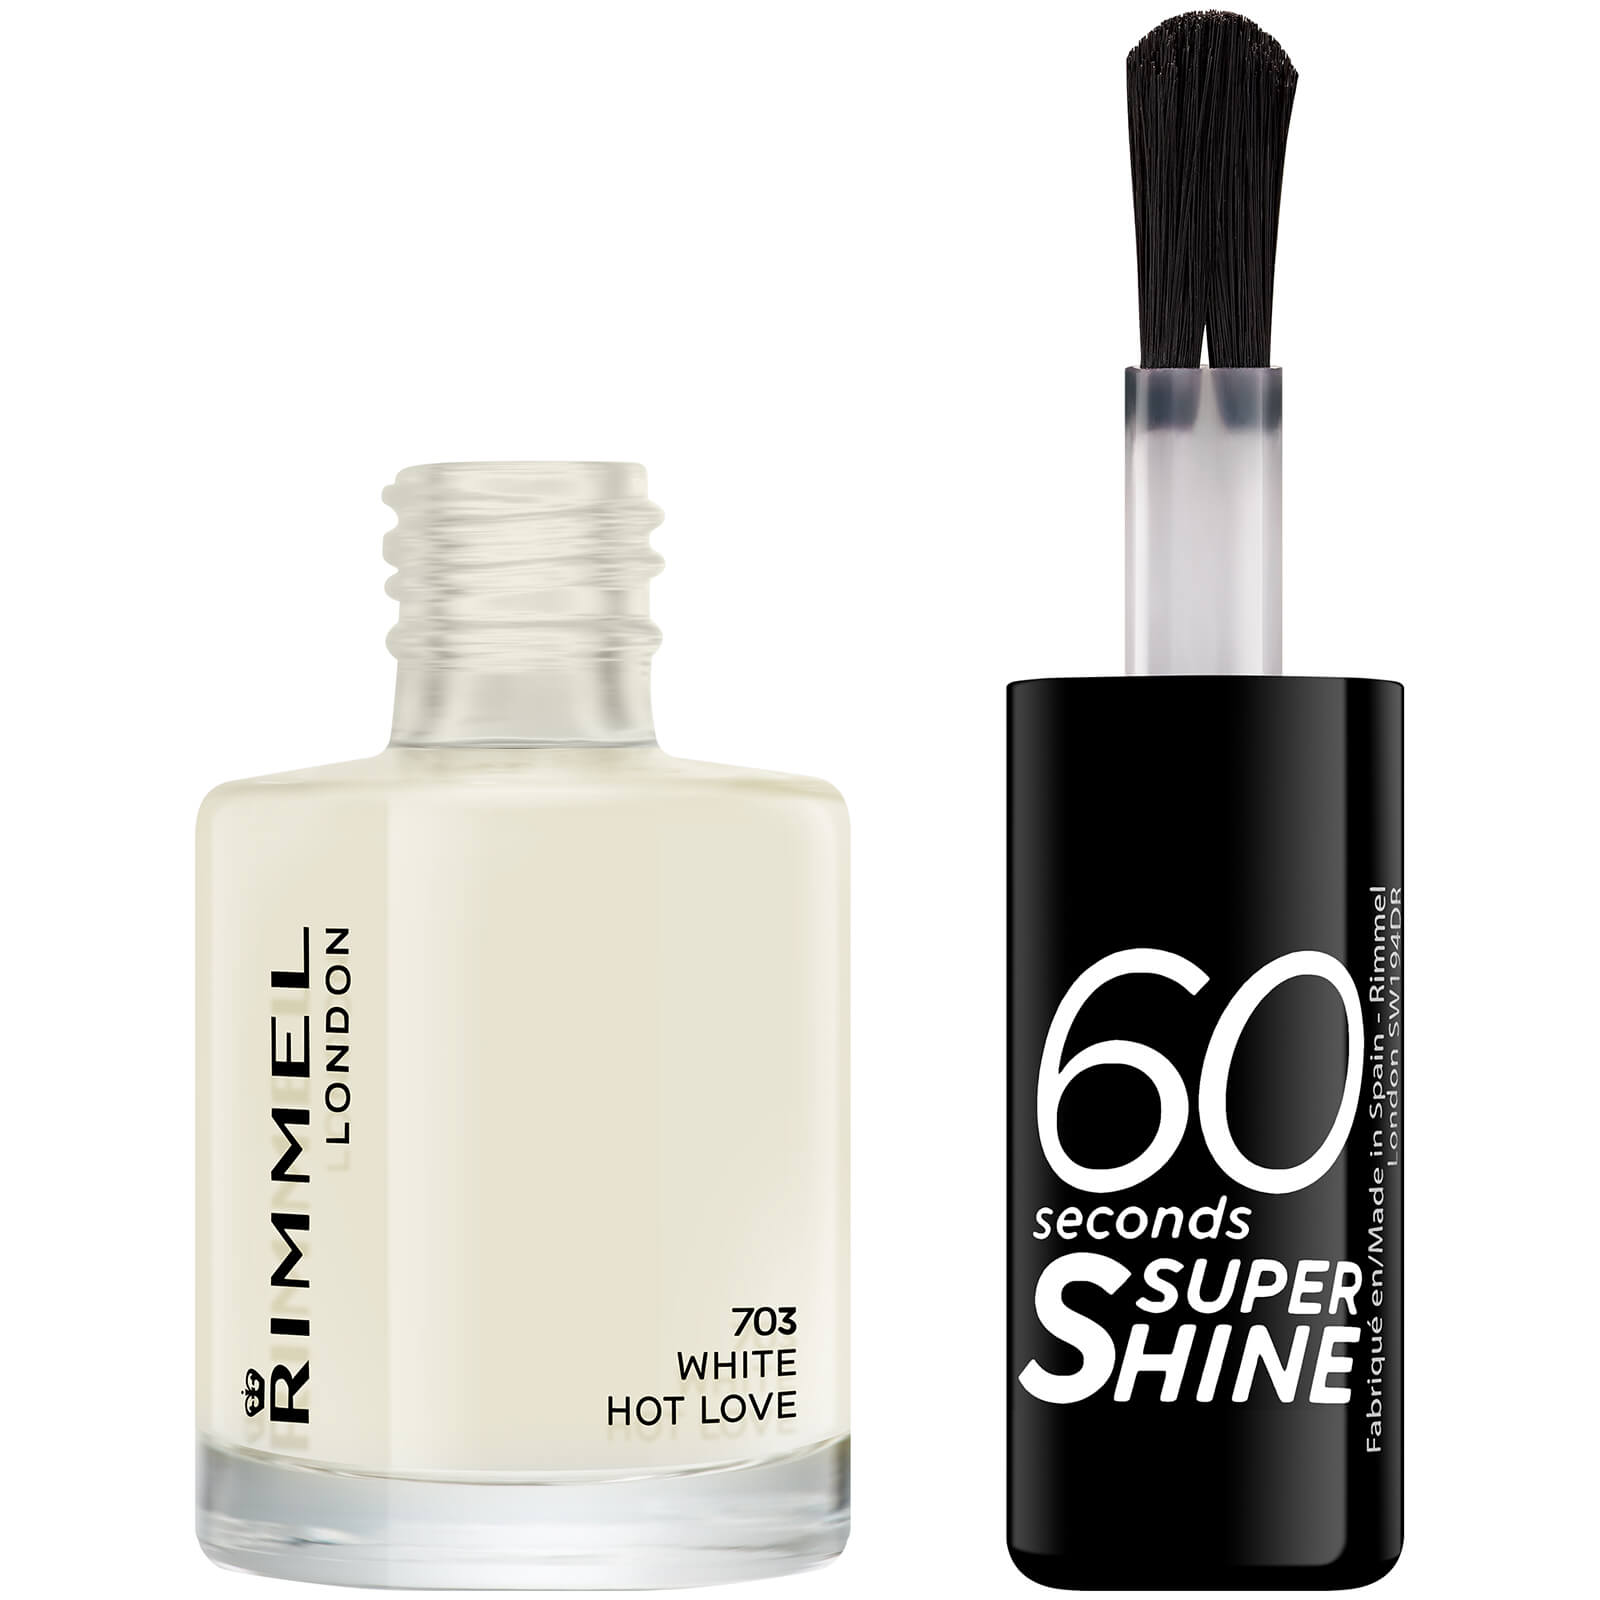 Rimmel London 60 Seconds Super Shine (various shades) - White Hot Love